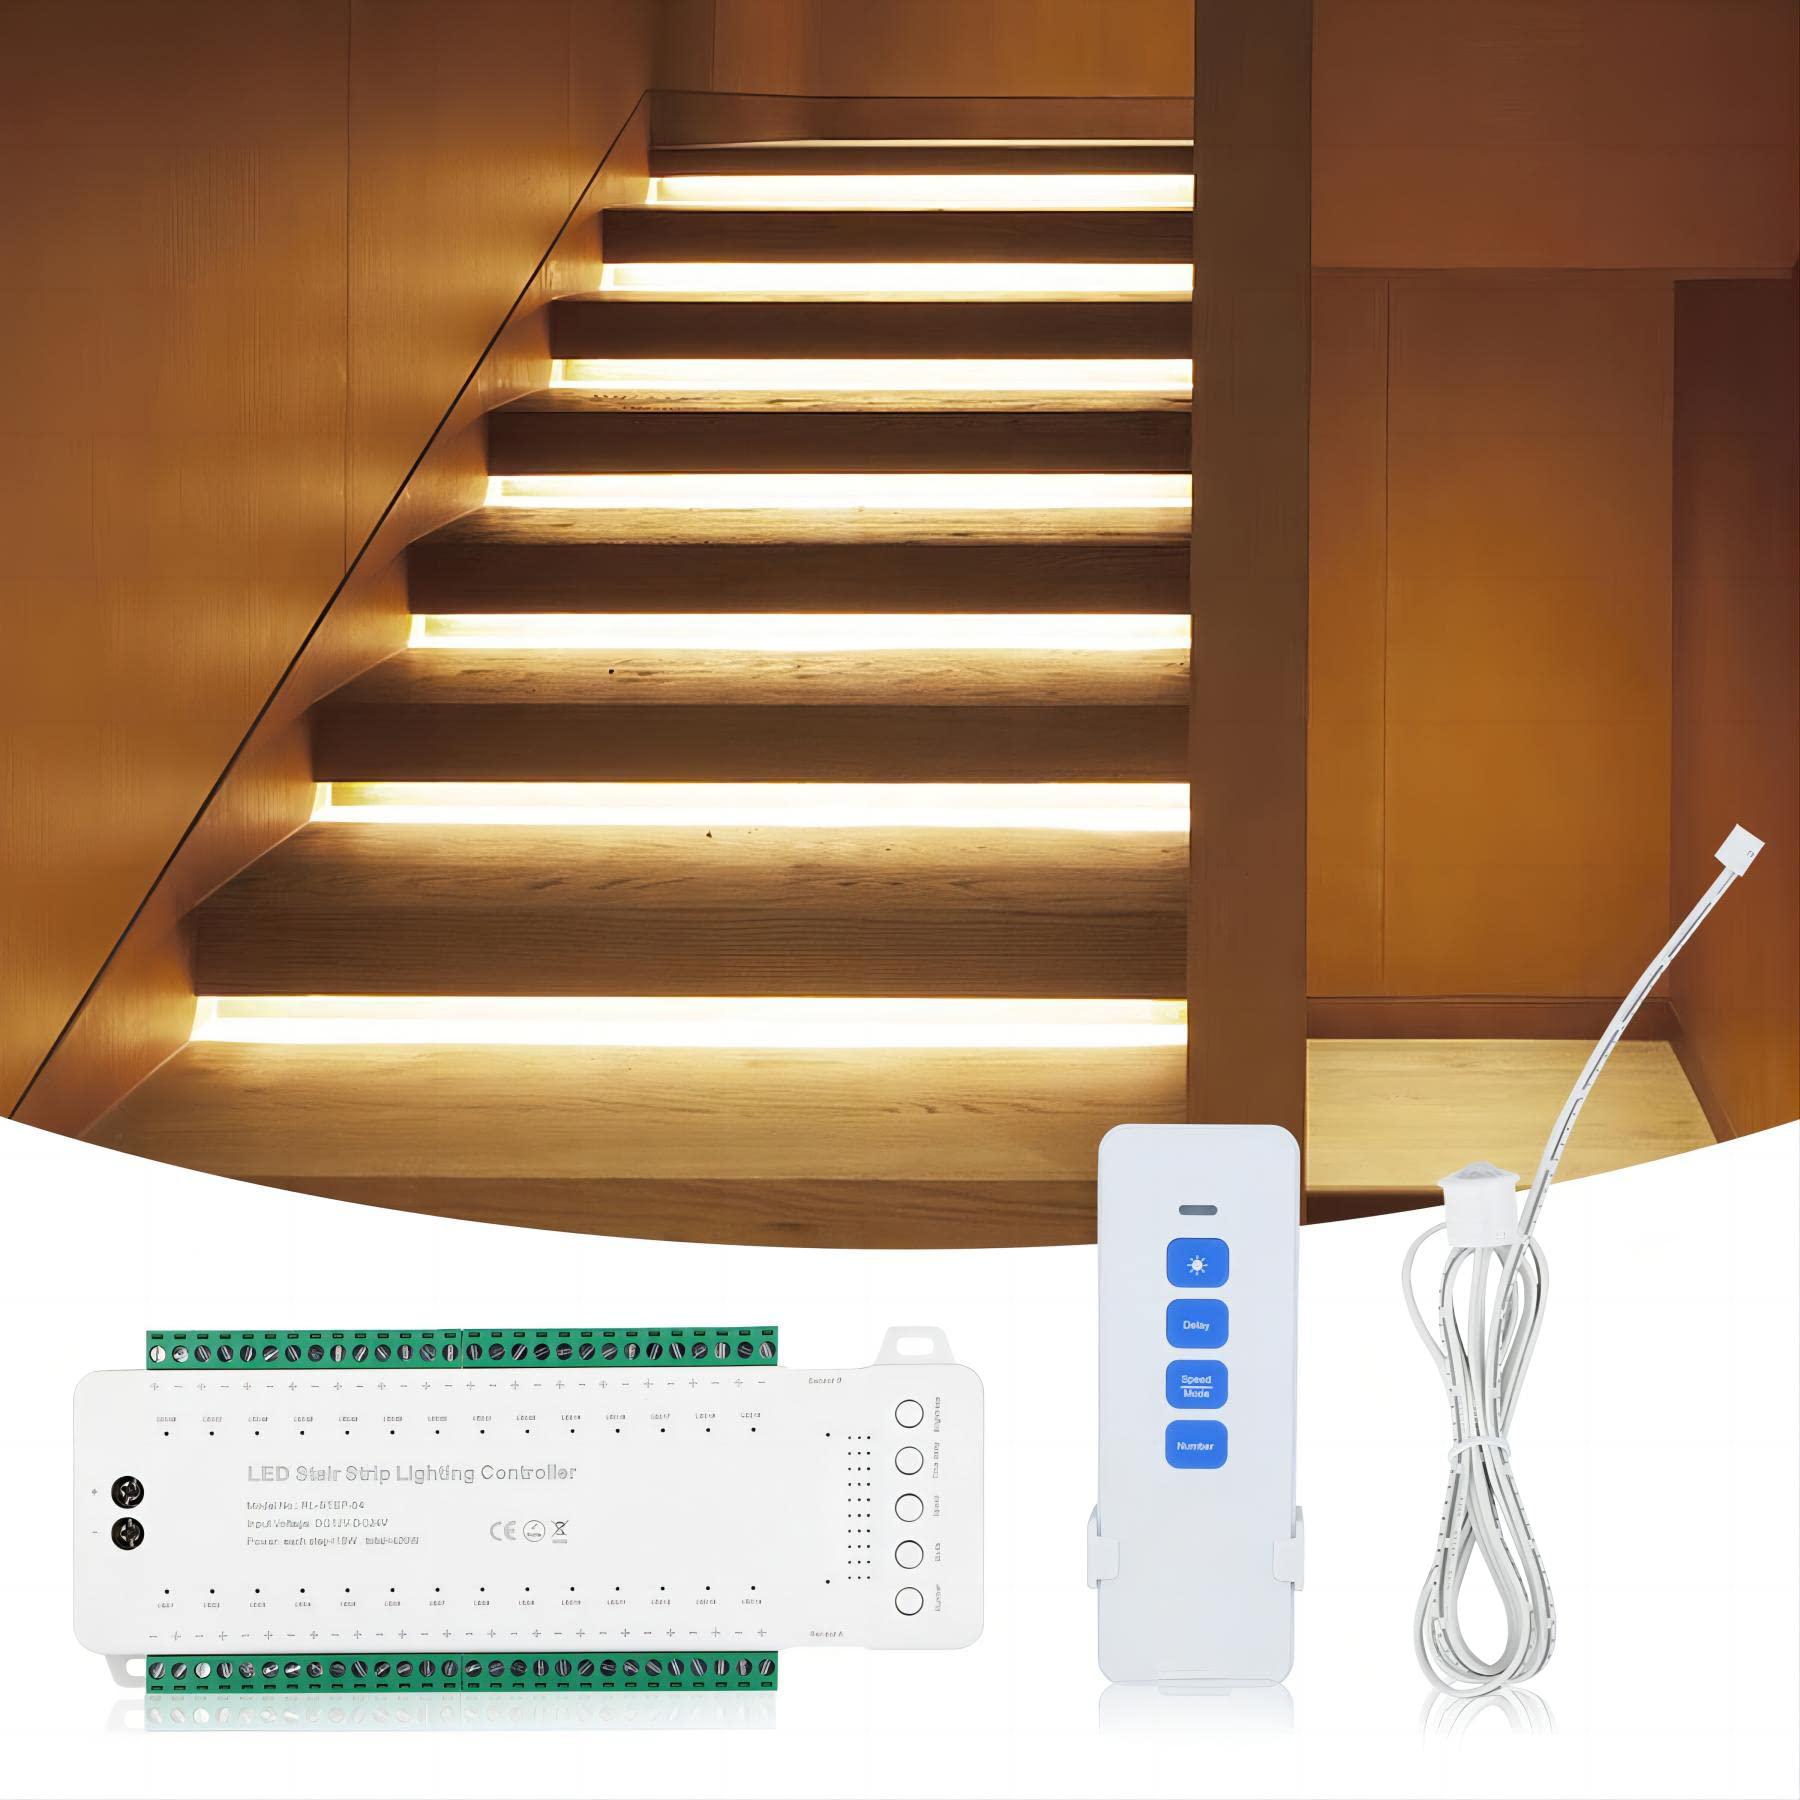 srora stair lights motion sensor, led stair light controller, 28 steps indoor led stair light sensor, 9 lighting modes adjust